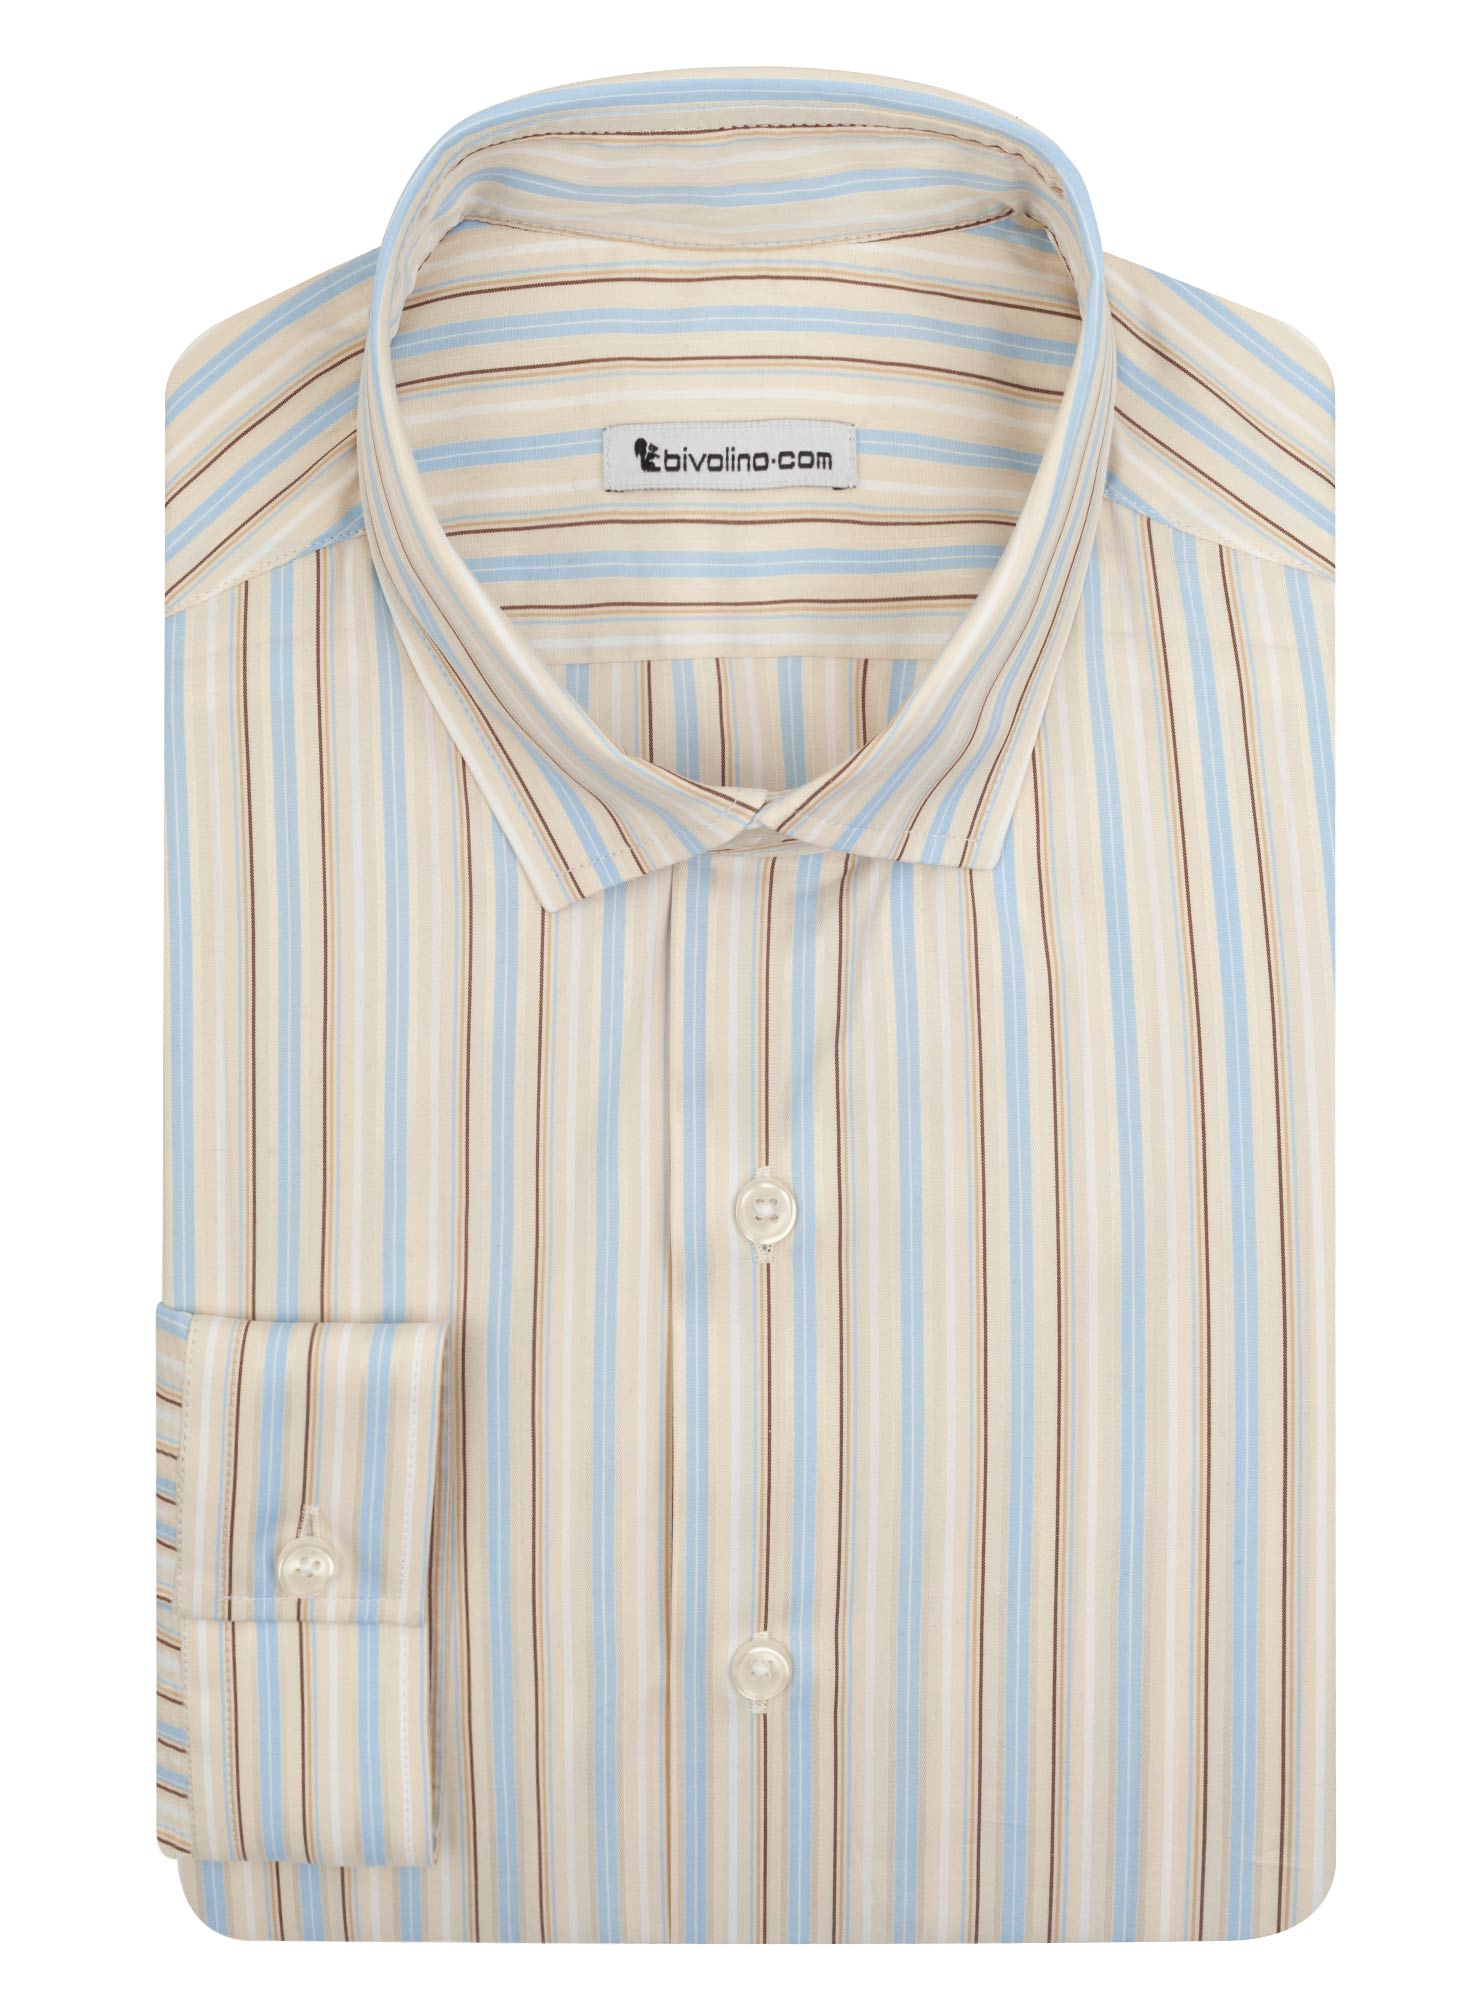 TERAMO - chemise popeline multicolor rayée bayadère beige-bleu - TANA 6